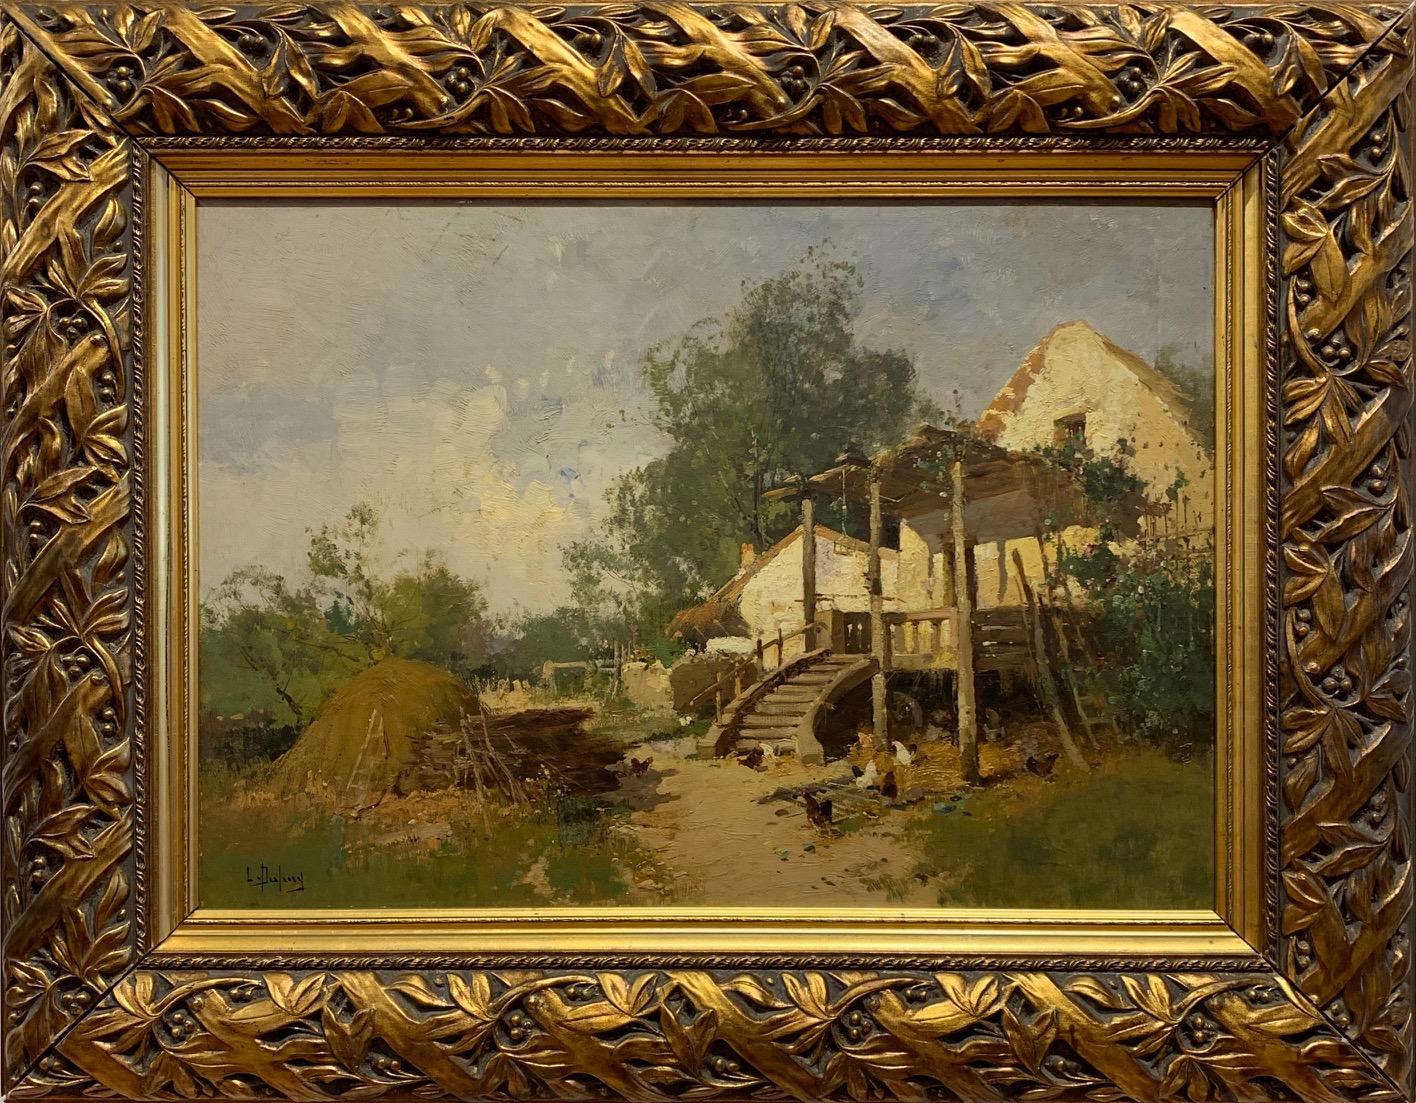 Gîte à la campagne, Impressionist 19. Jahrhundert – Painting von Eugene Galien-Laloue